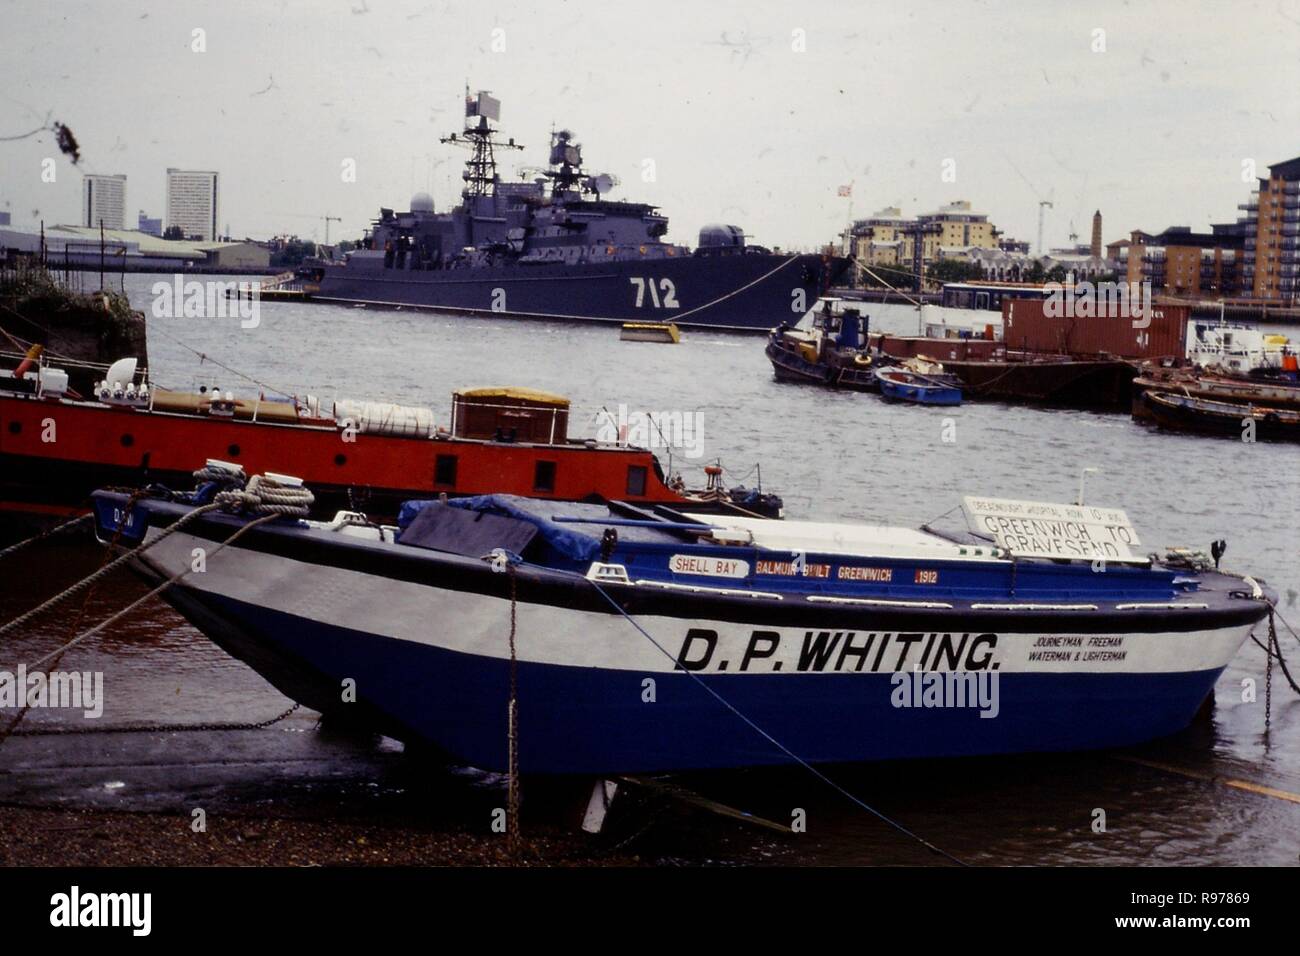 Neustrashimyy 712 Russian Navy vessel docked at Greenwich Stock Photo